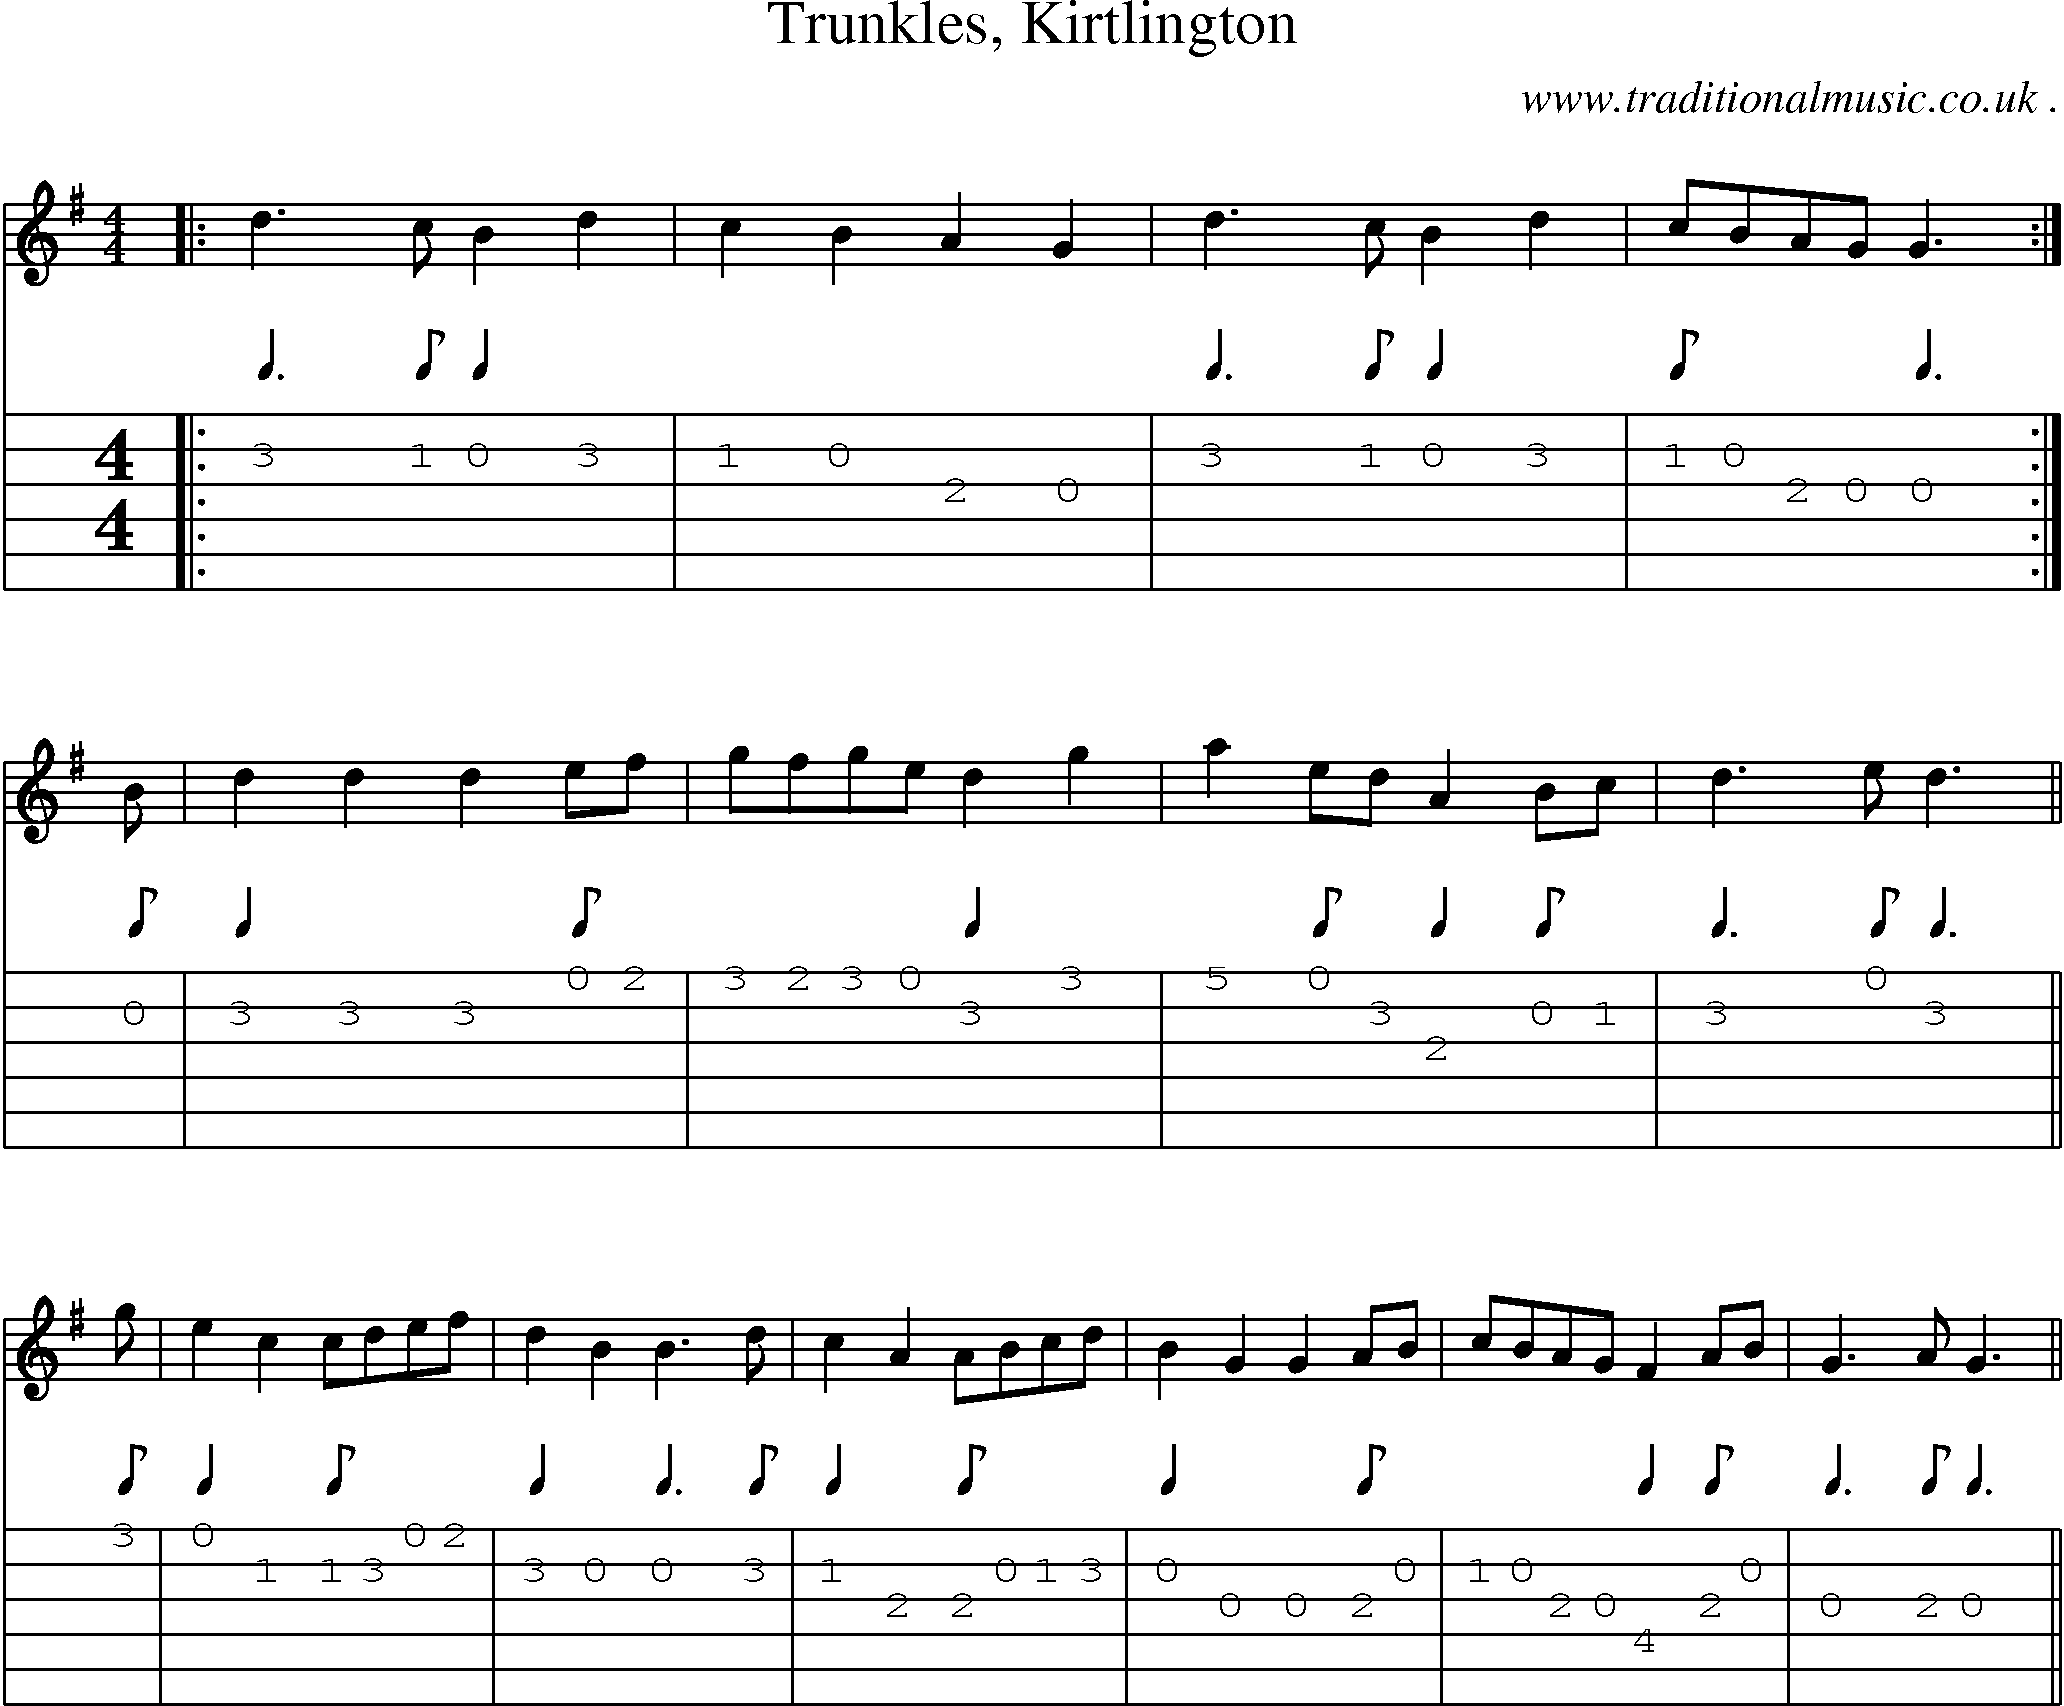 Sheet-Music and Guitar Tabs for Trunkles Kirtlington